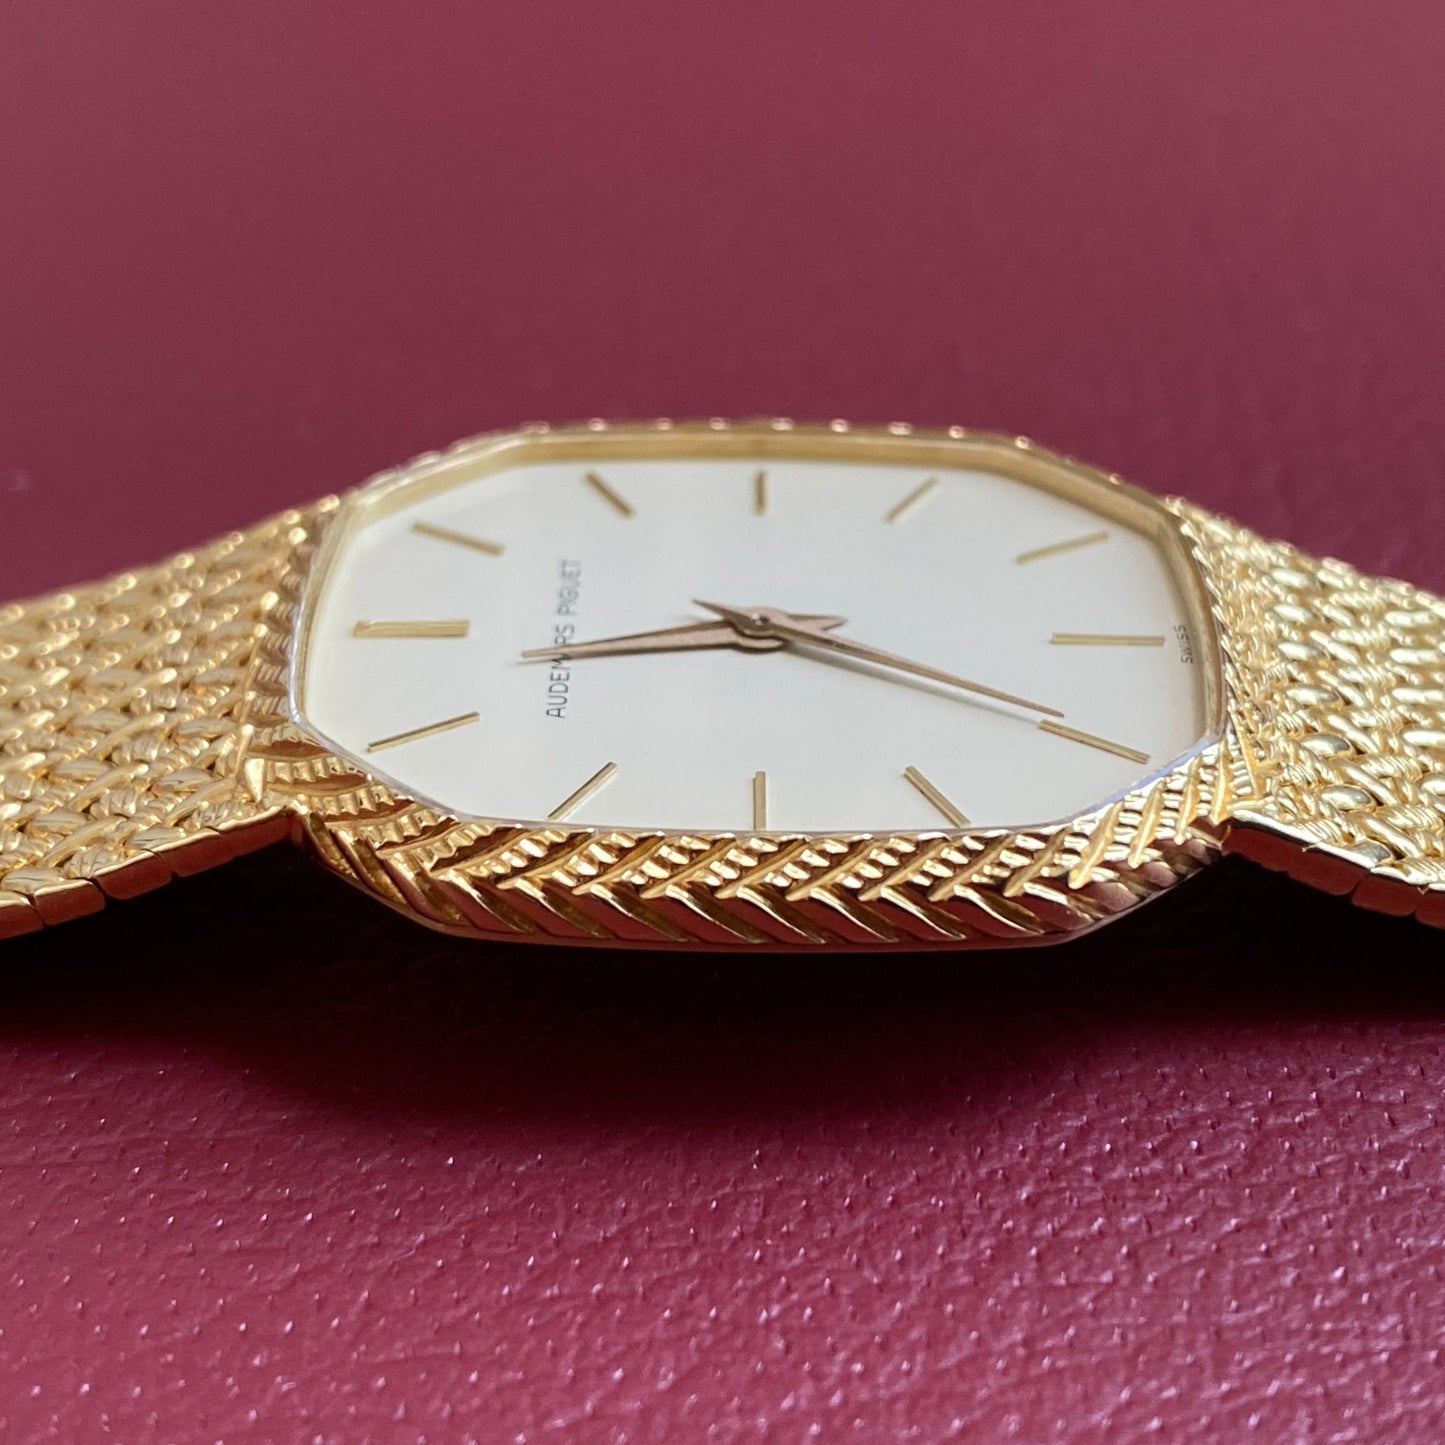 Audemars Piguet Octagonal 18K YG Vintage Watch - PM Vintage Watches - Audemars Piguet